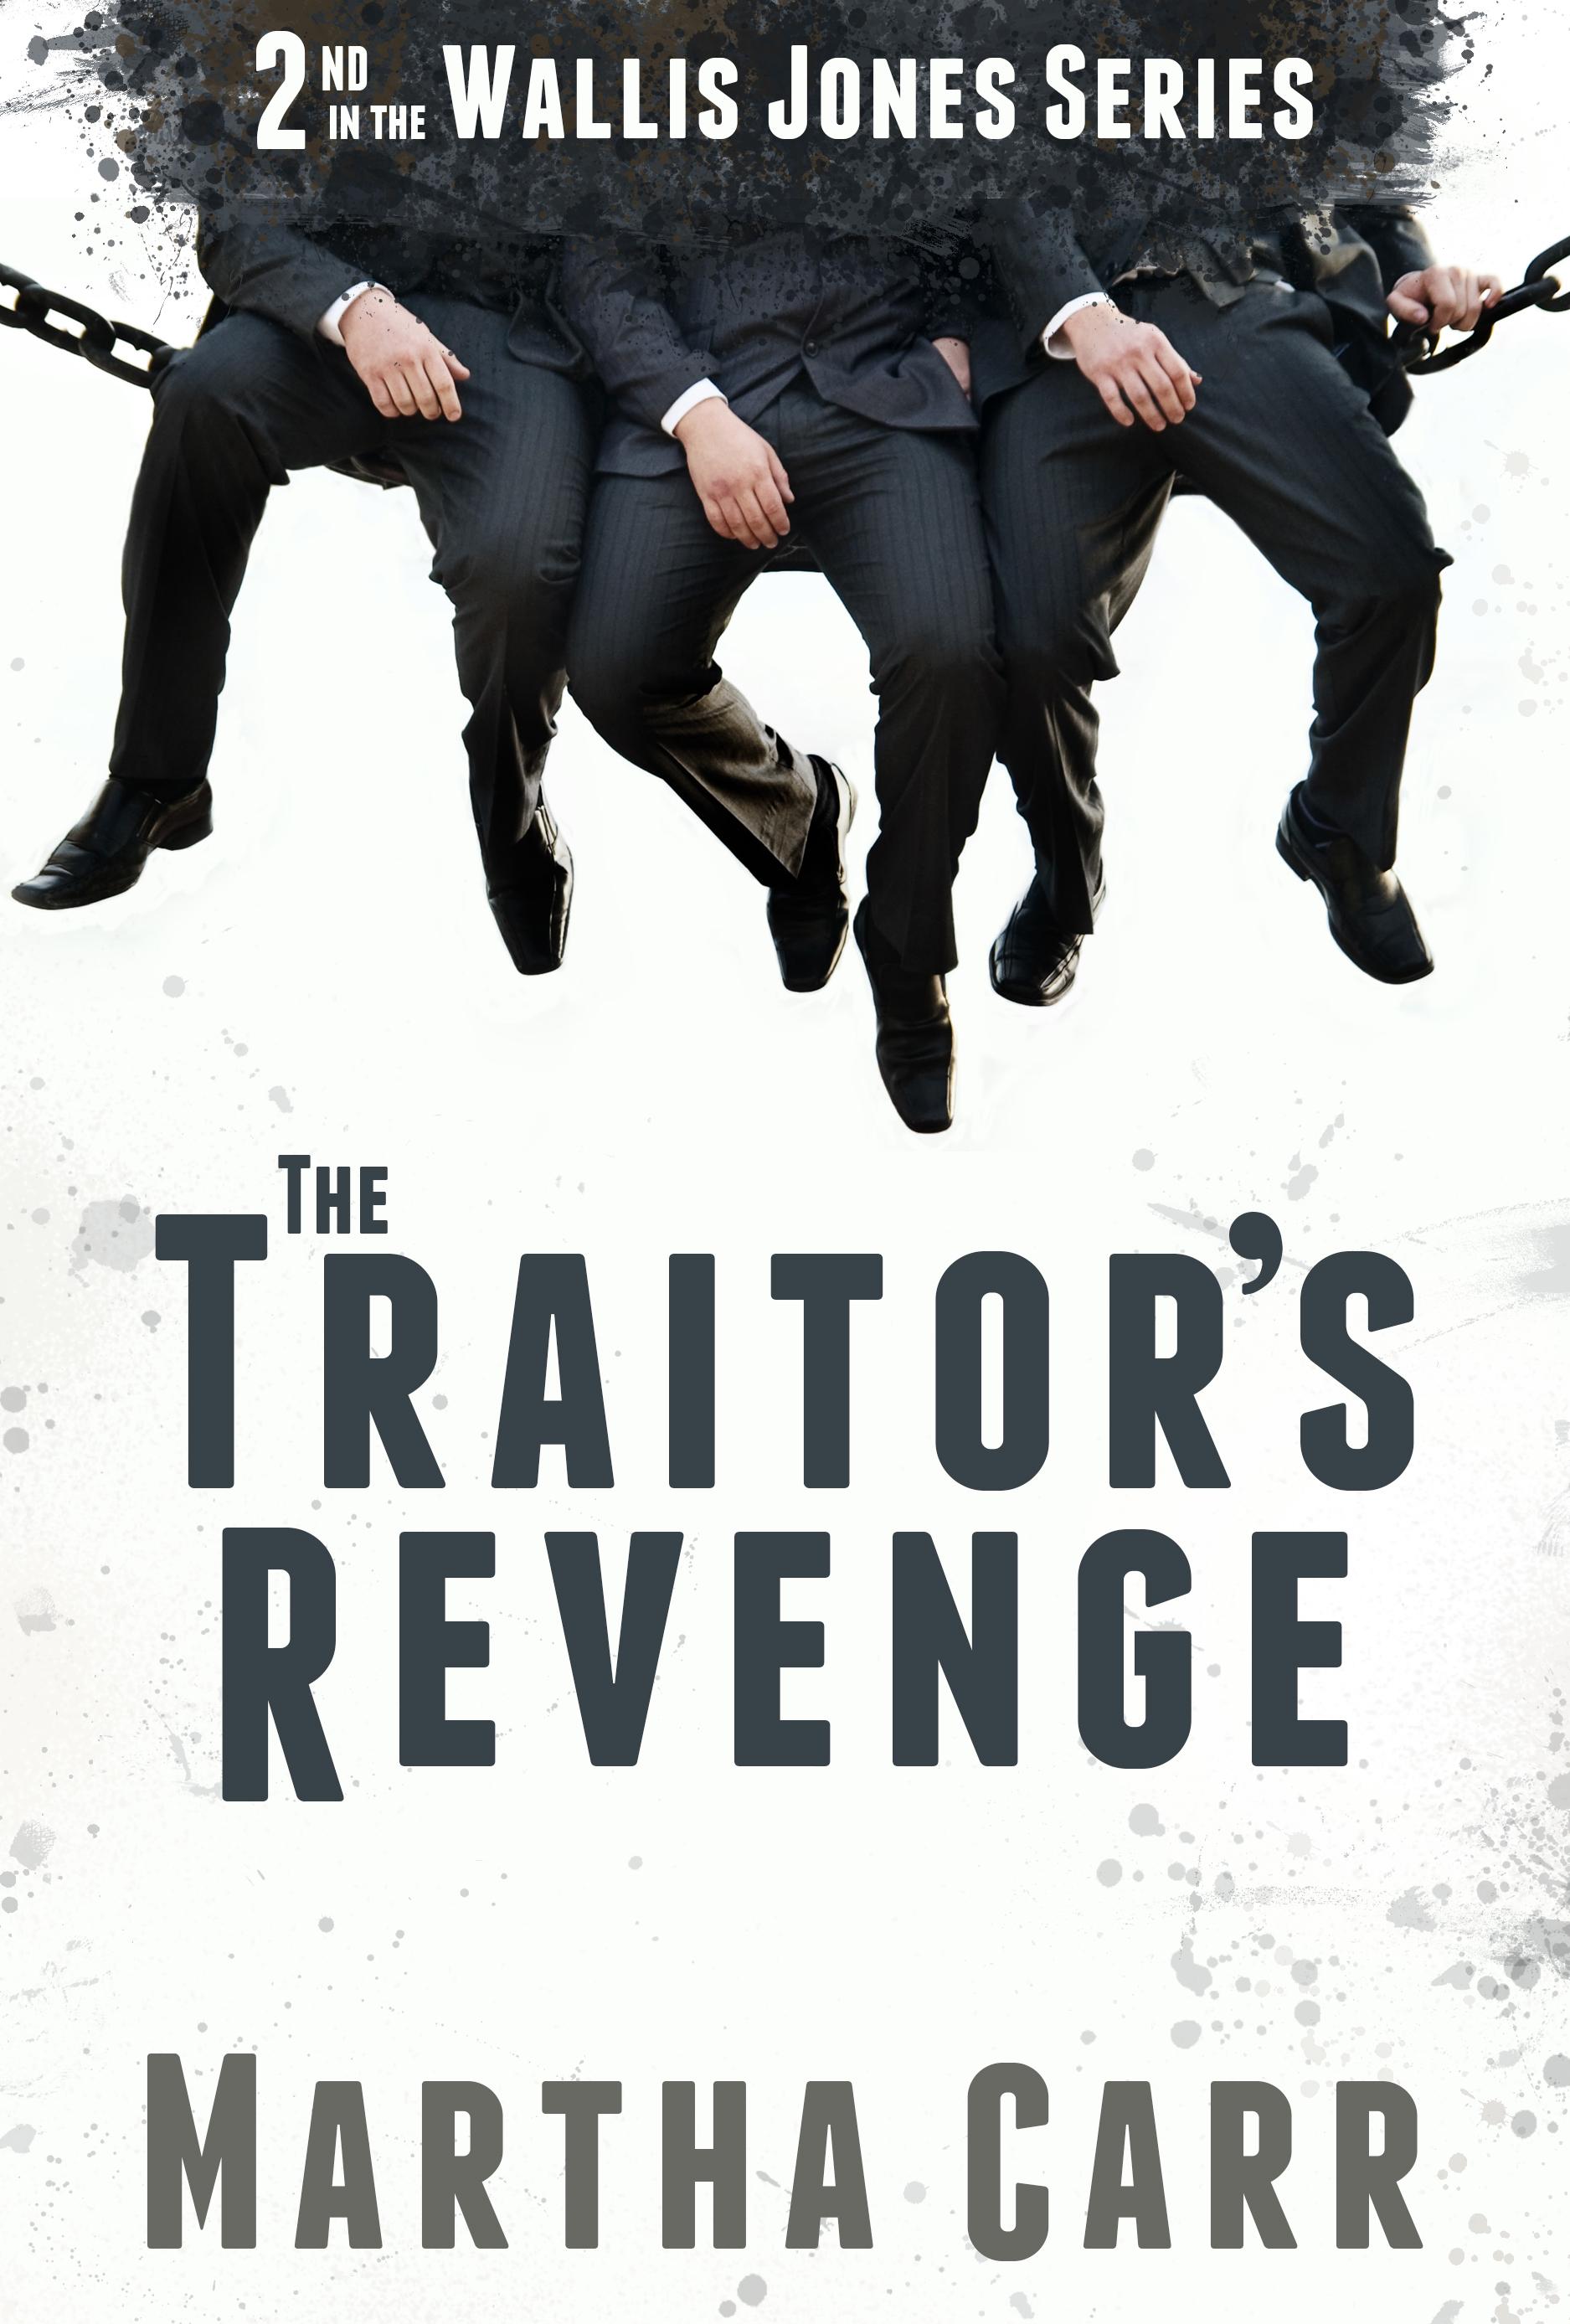 The Traitor's Revenge